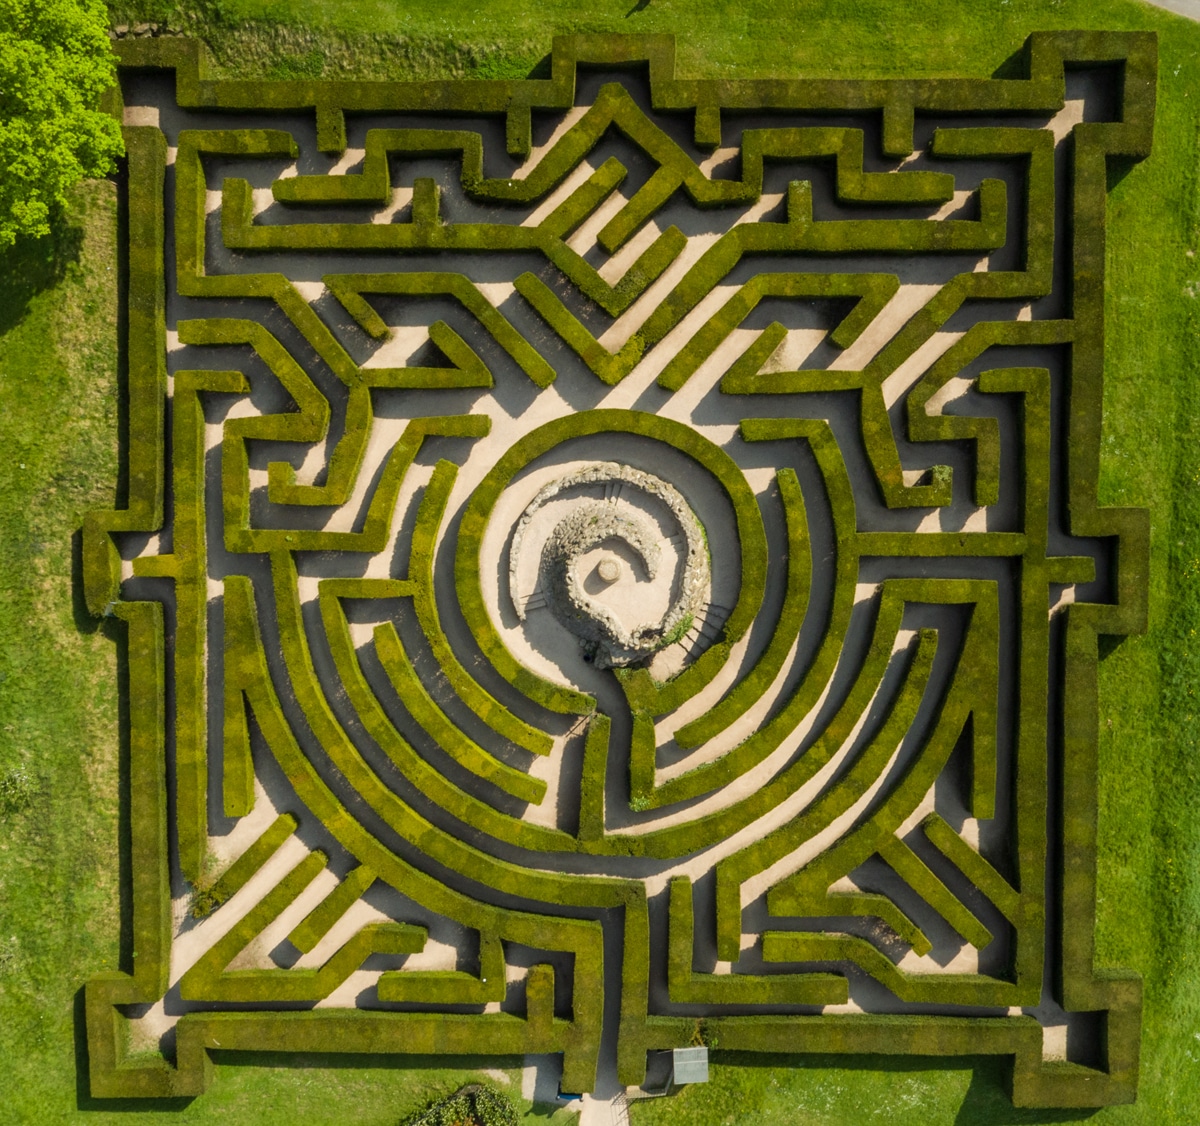 Leeds castle maze garden